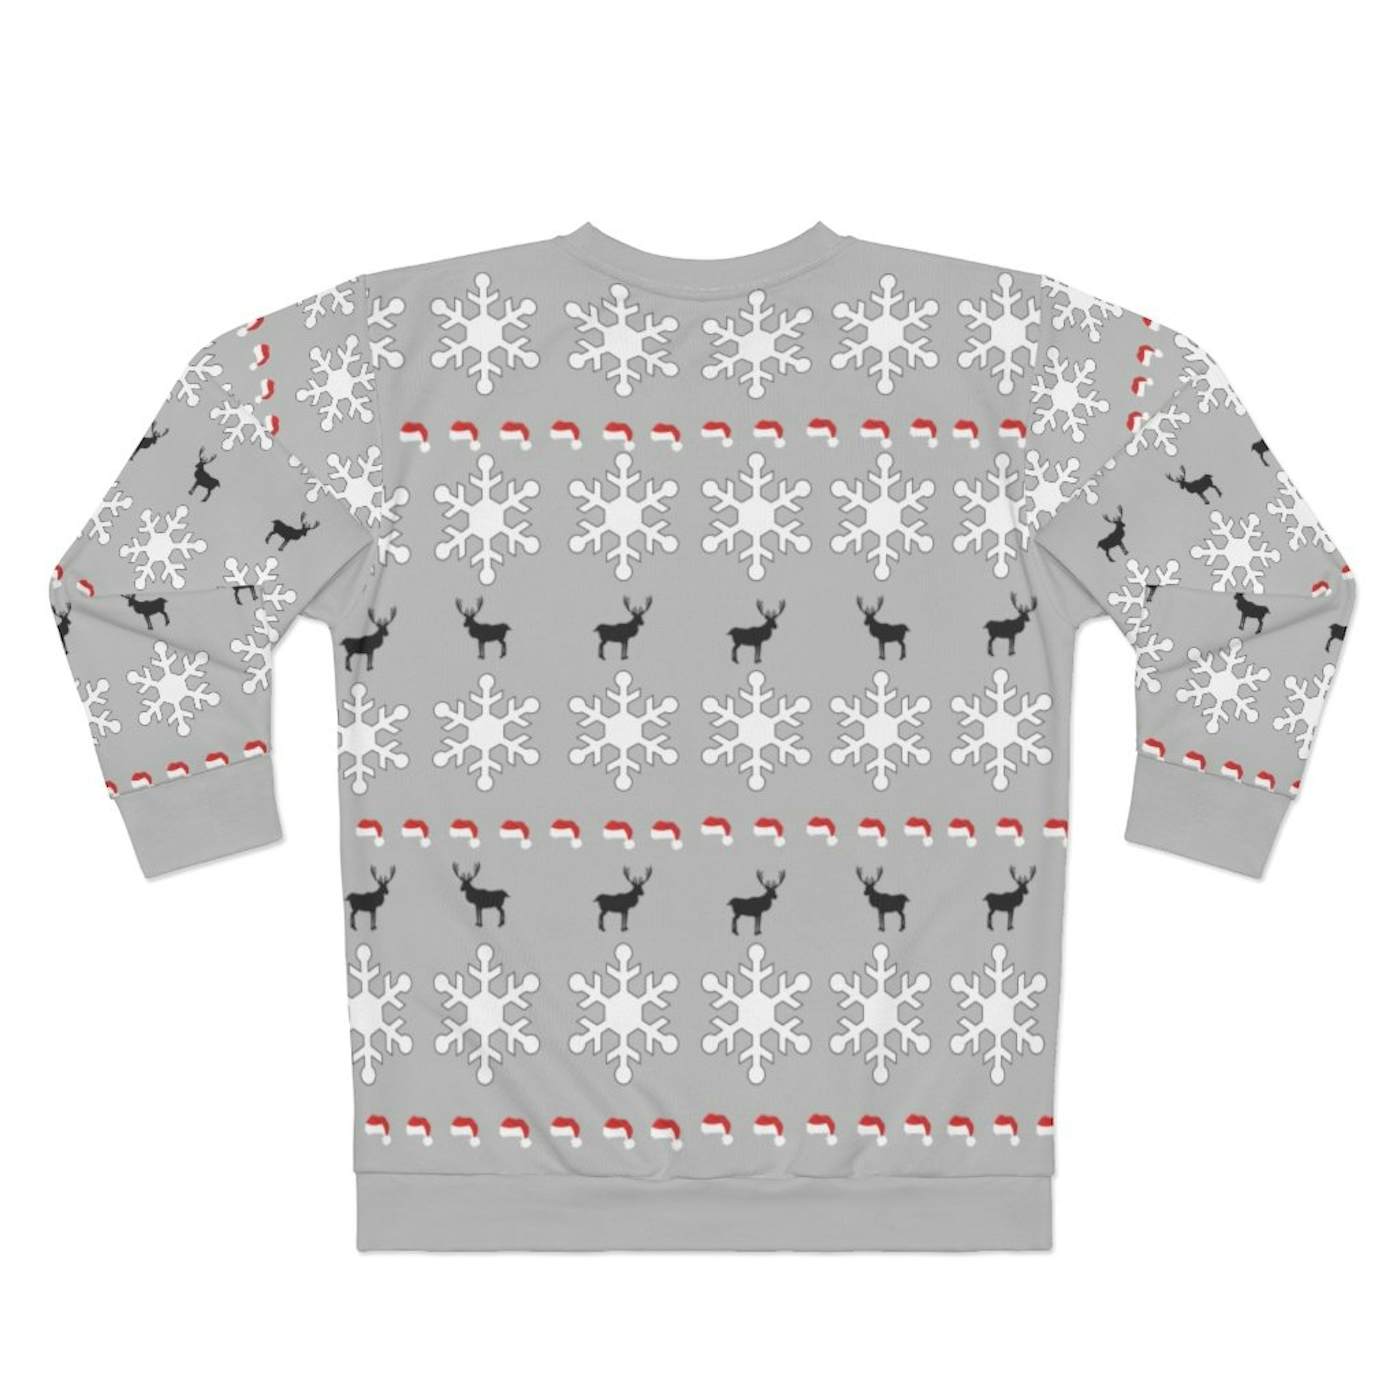 Bell Biv DeVoe Christmas Sweater